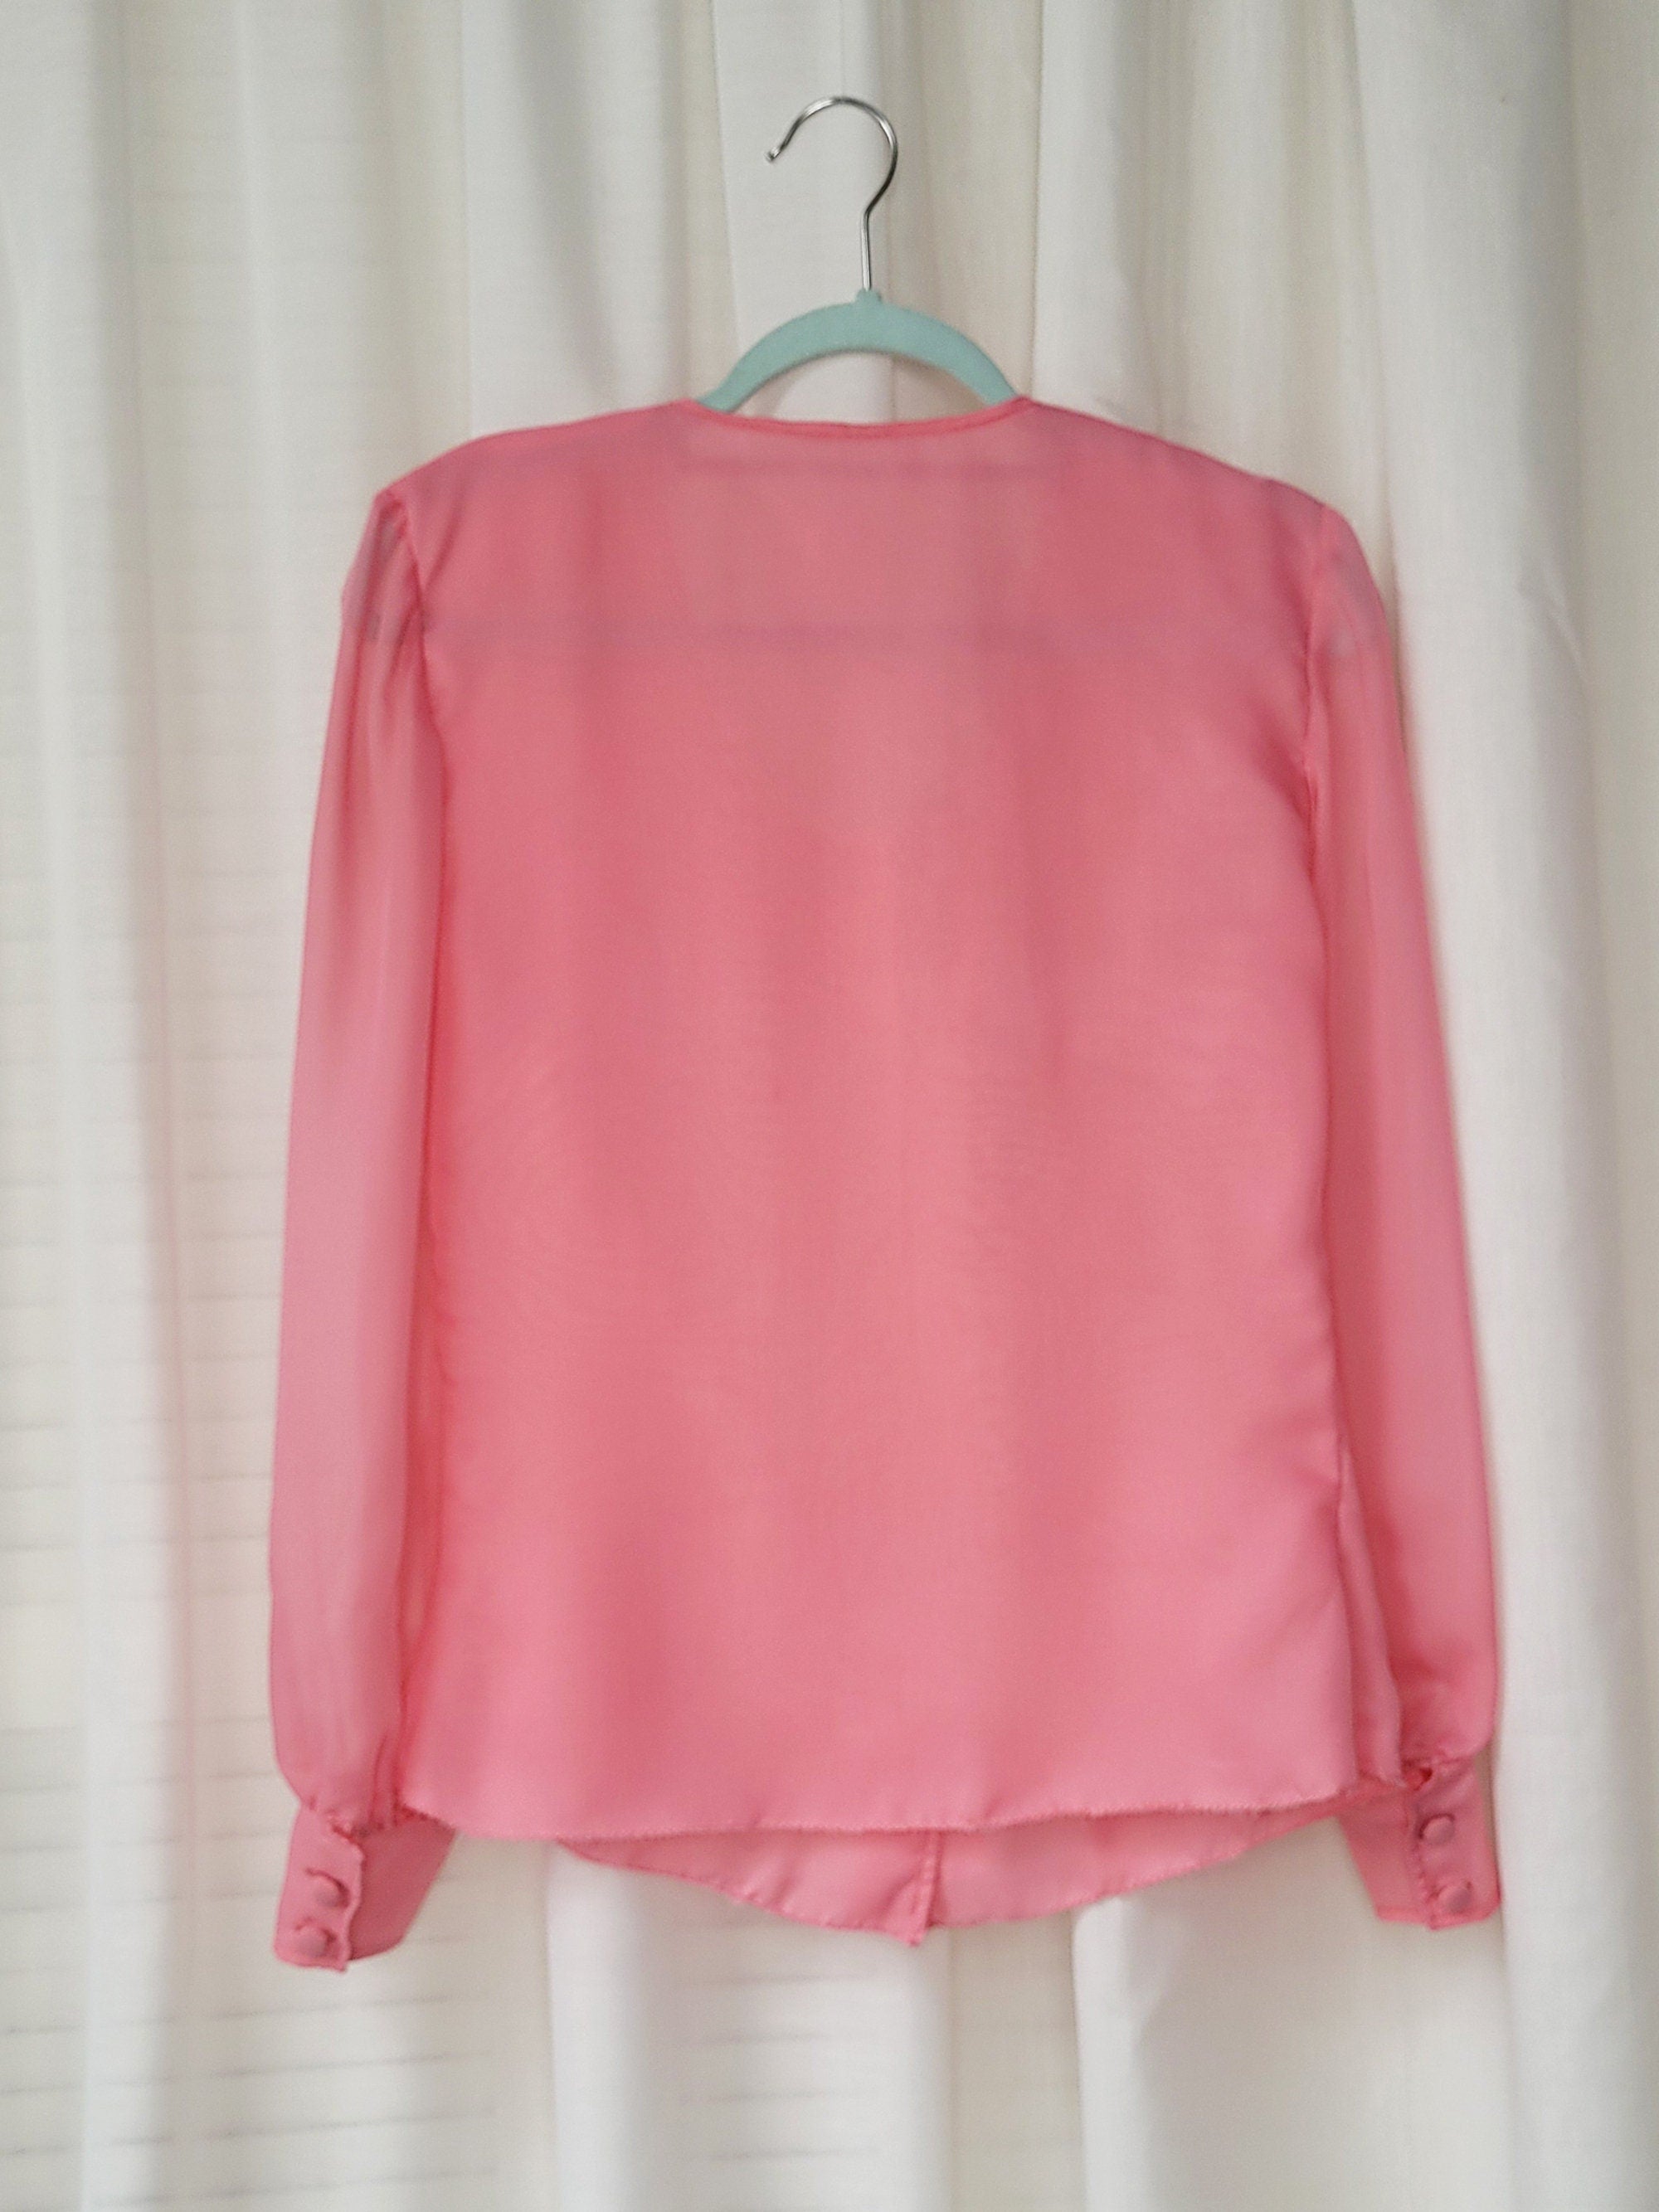 Vintage 70s pink handmade balloon sleeve blouse top